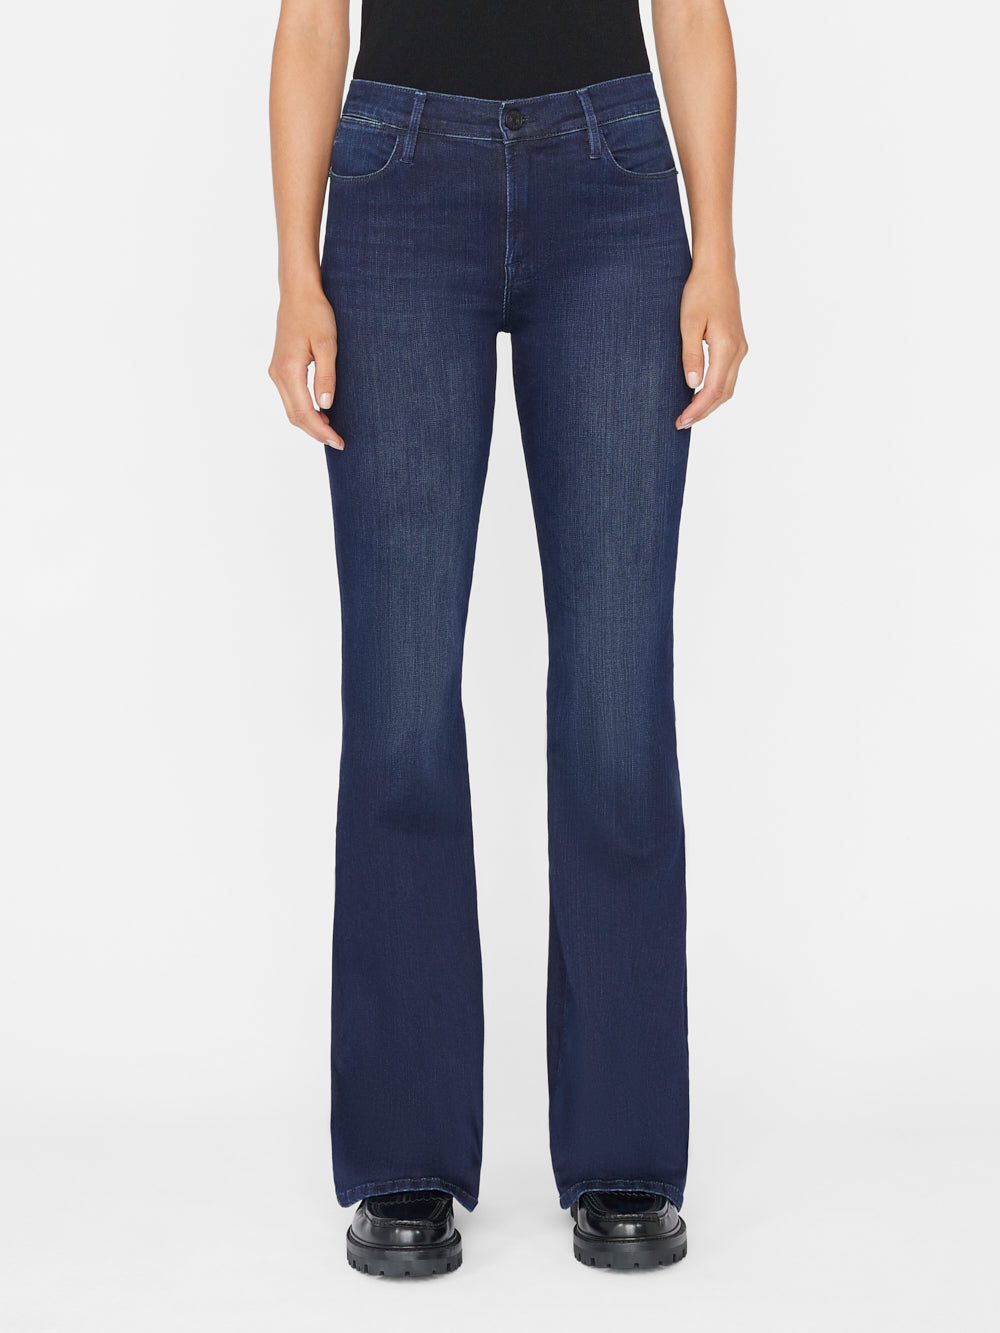 FRAME Denim High-Rise Flared Jeans in Blau Damen Bekleidung Jeans Schlagjeans 